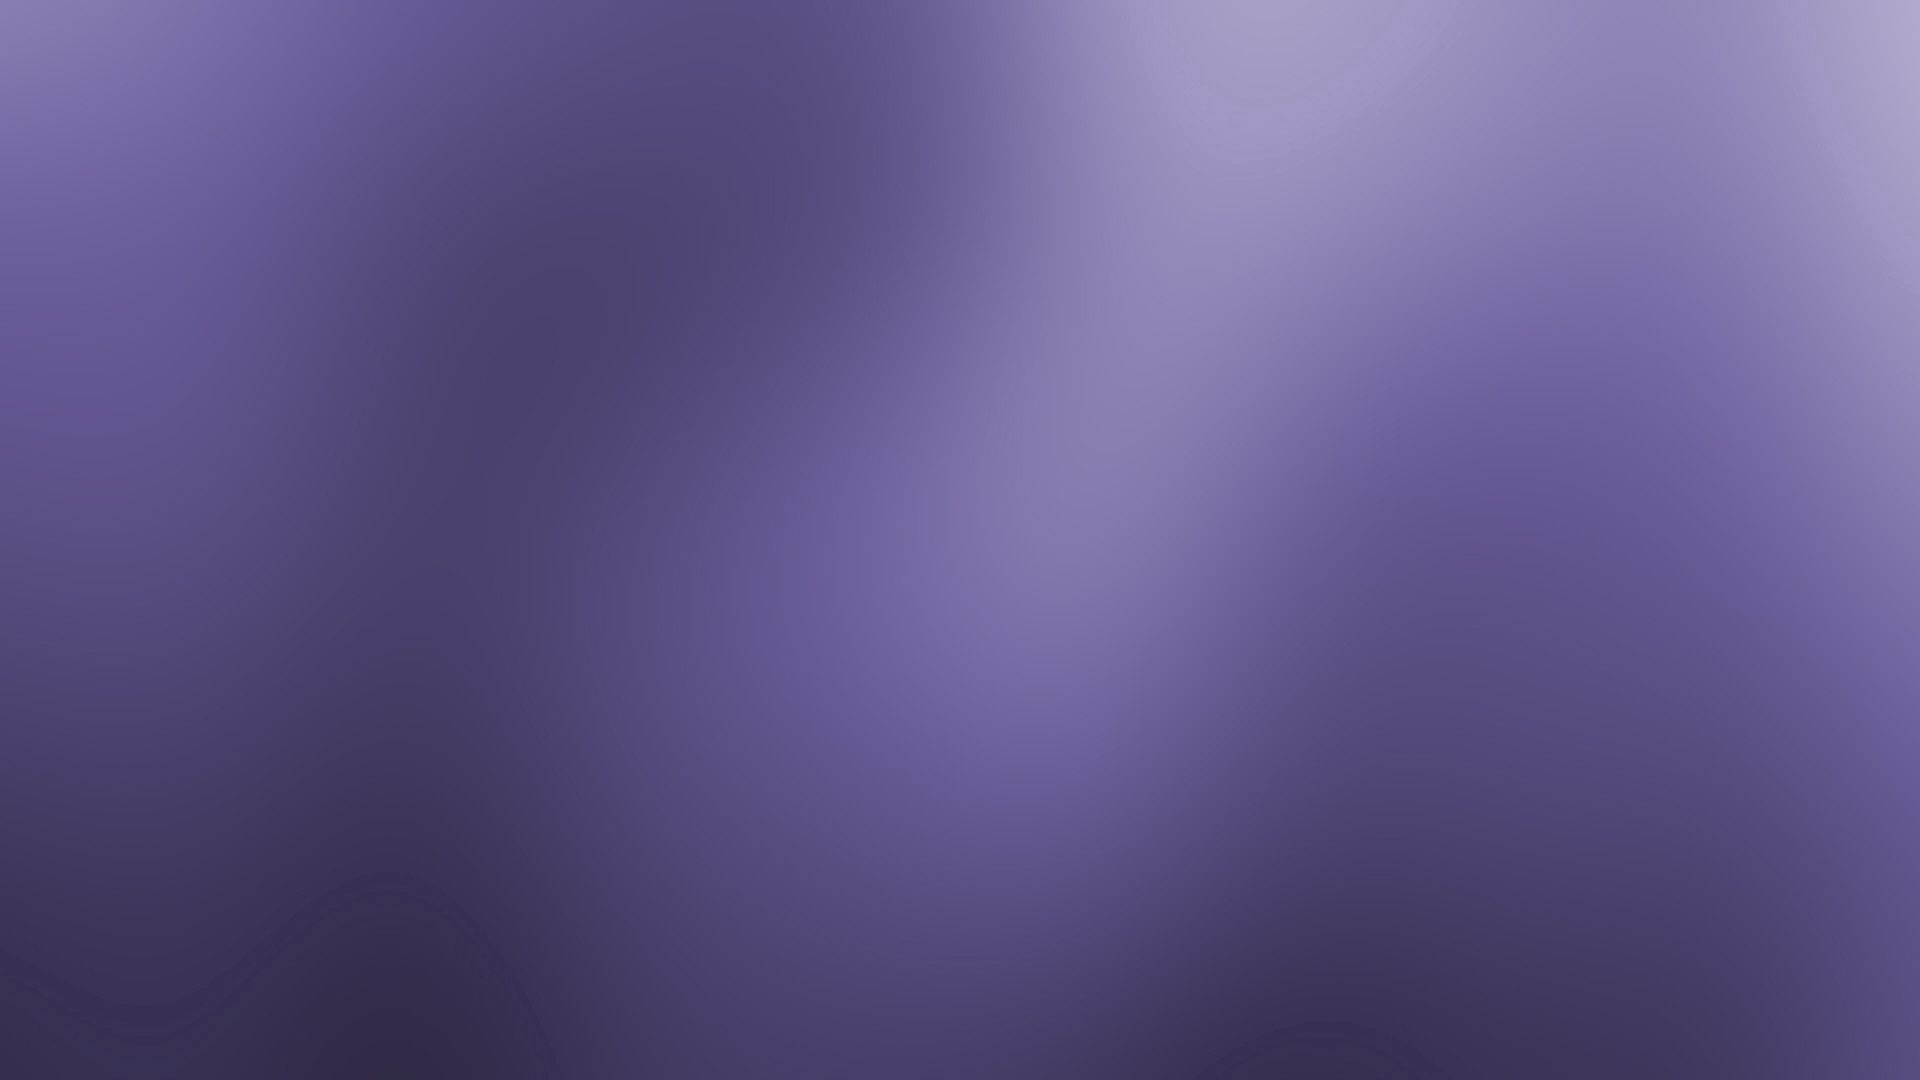 abstract, violet, dark background, stains, spots, purple Image for desktop